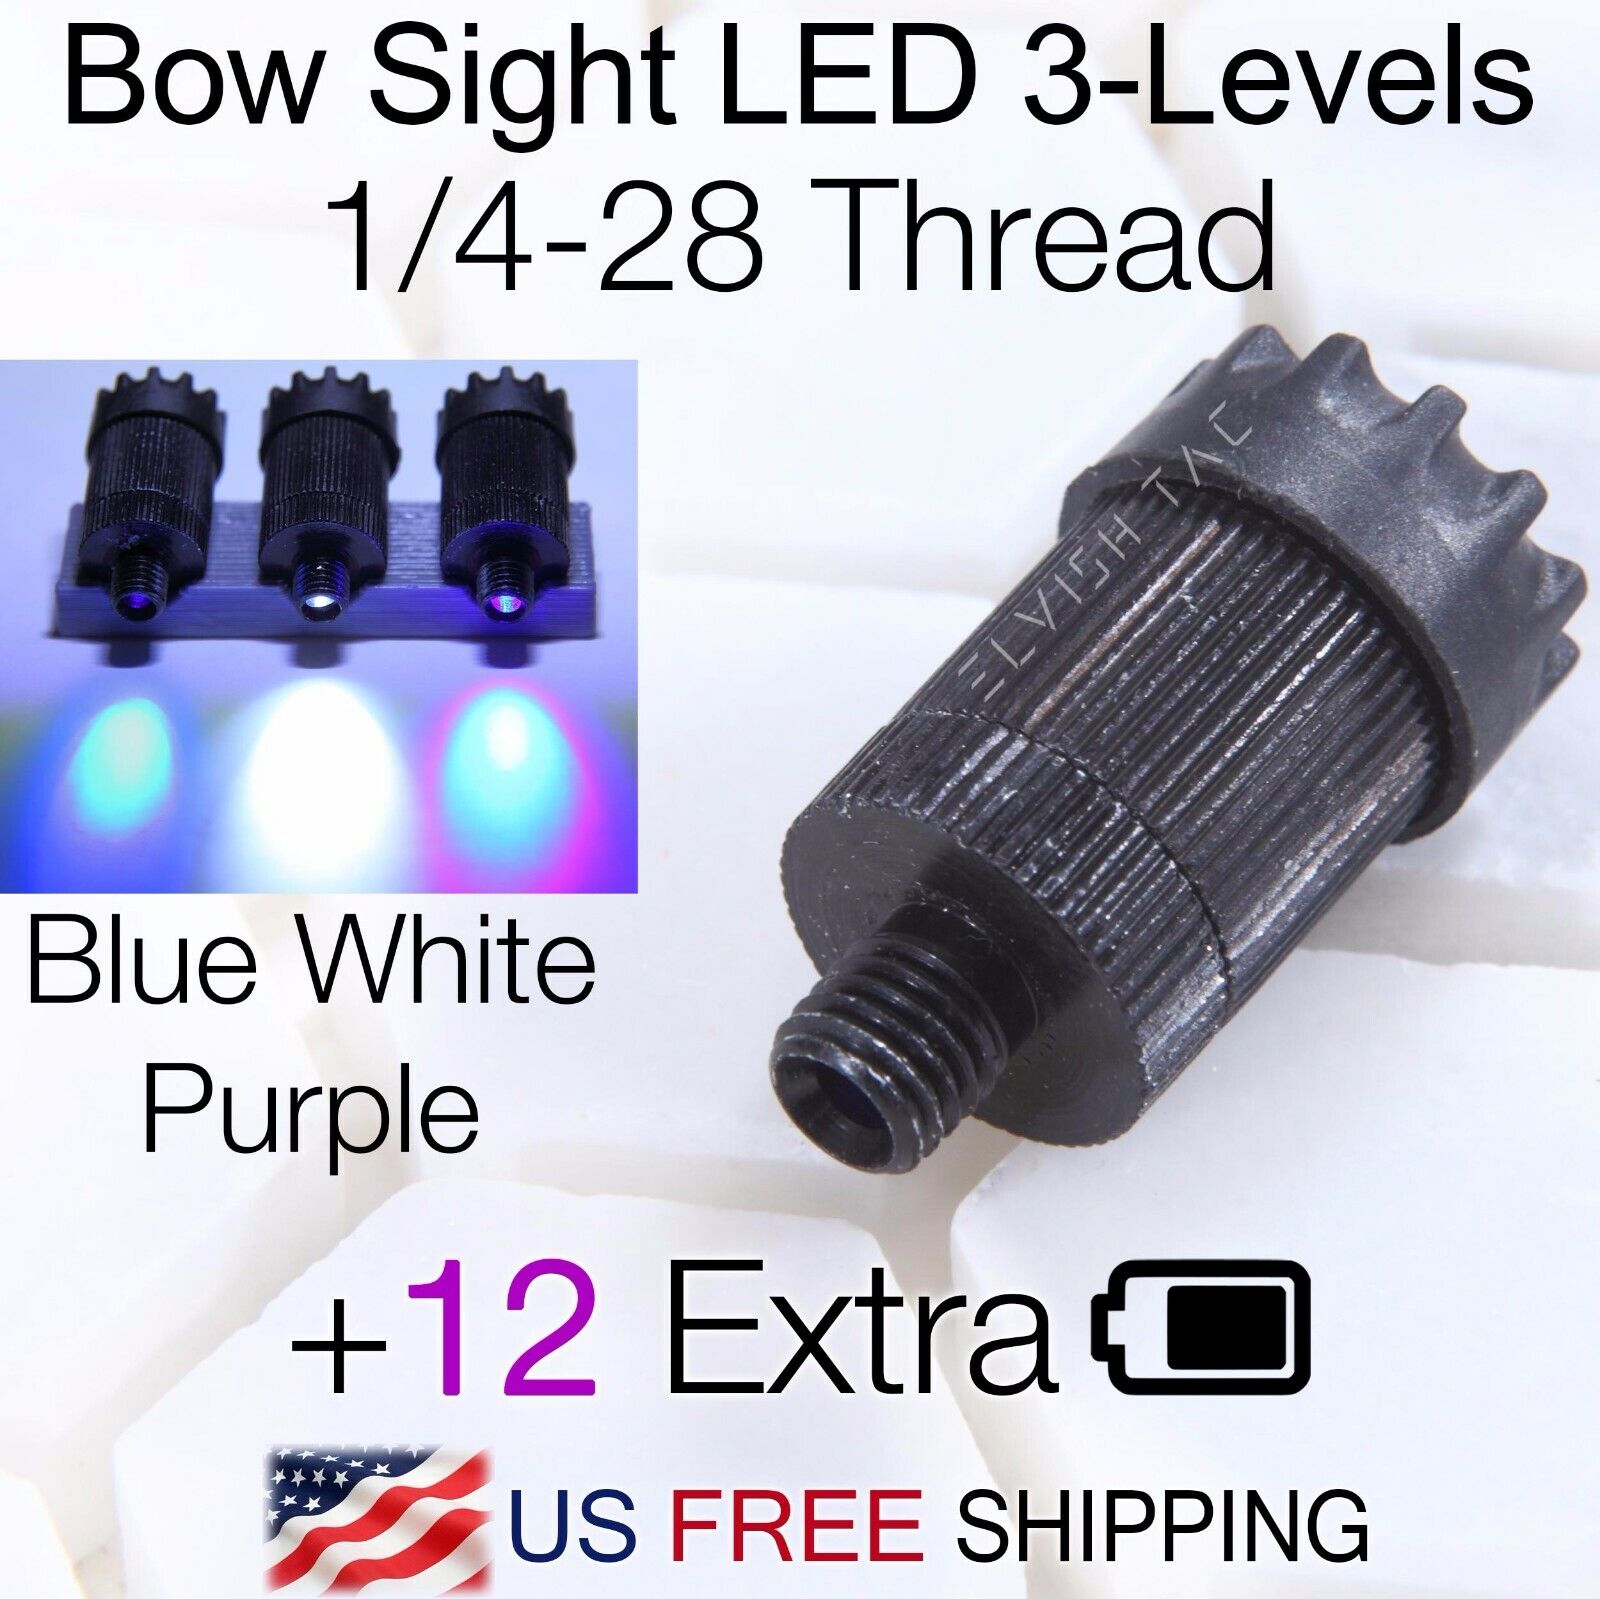 Compound Bow Sight Light Bowlight UV LED 3-Levels Rheostat A